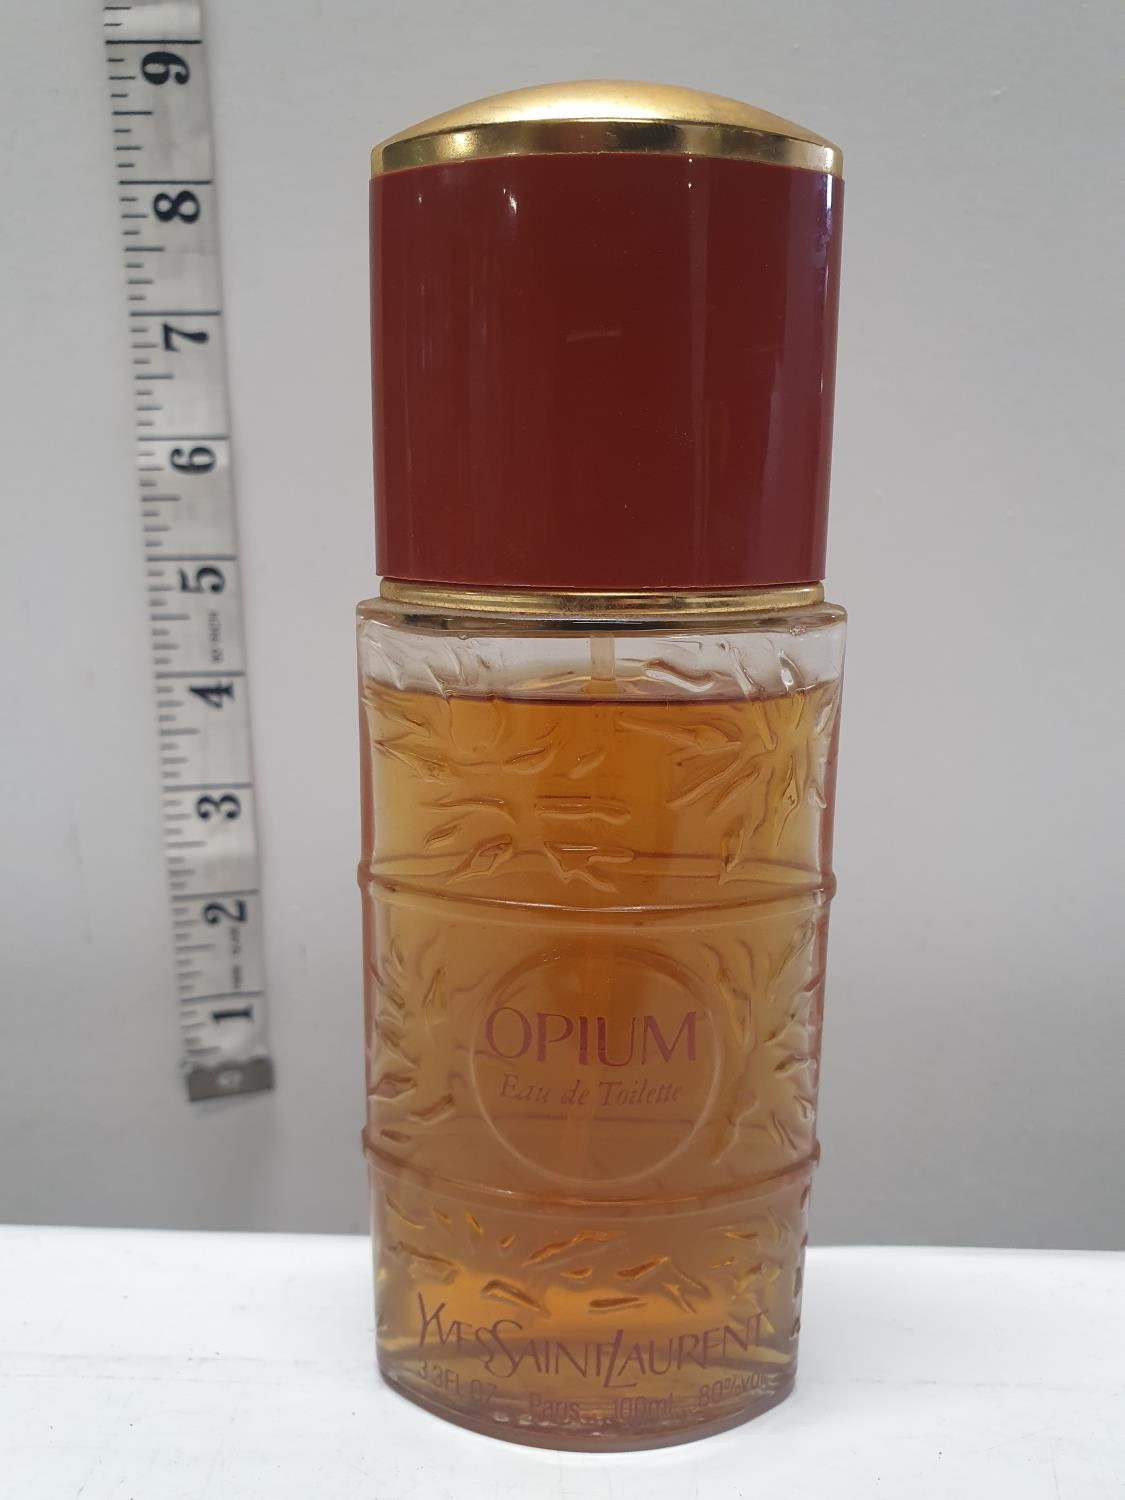 A bottle of YSL Opium